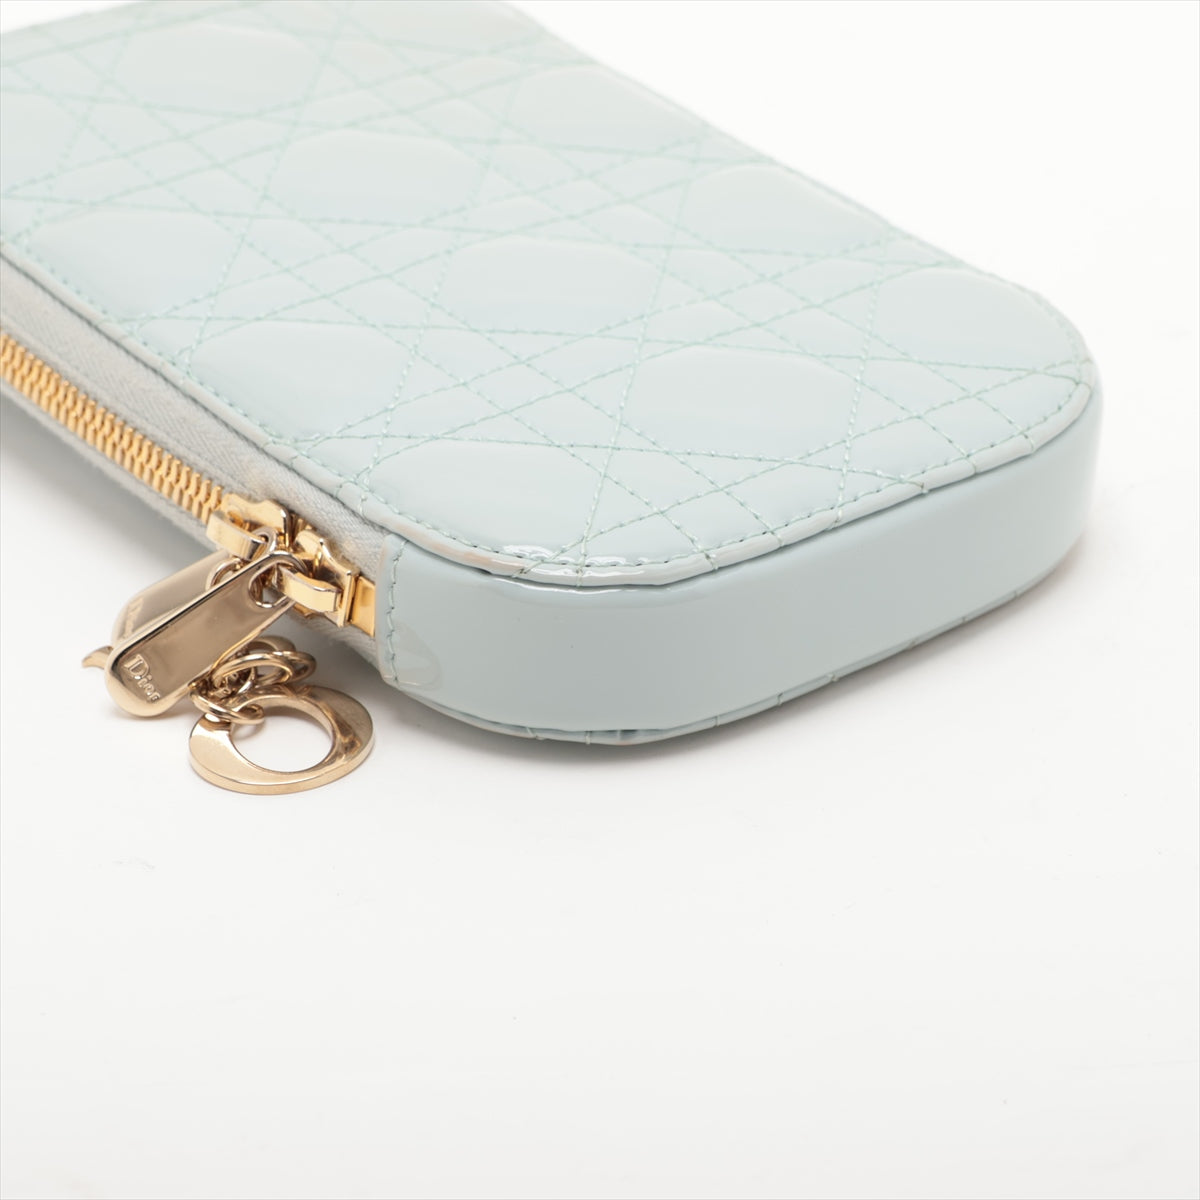 Christian Dior Canaridge Foundhalter Patent Leather Chain Shoulder Bag Blue